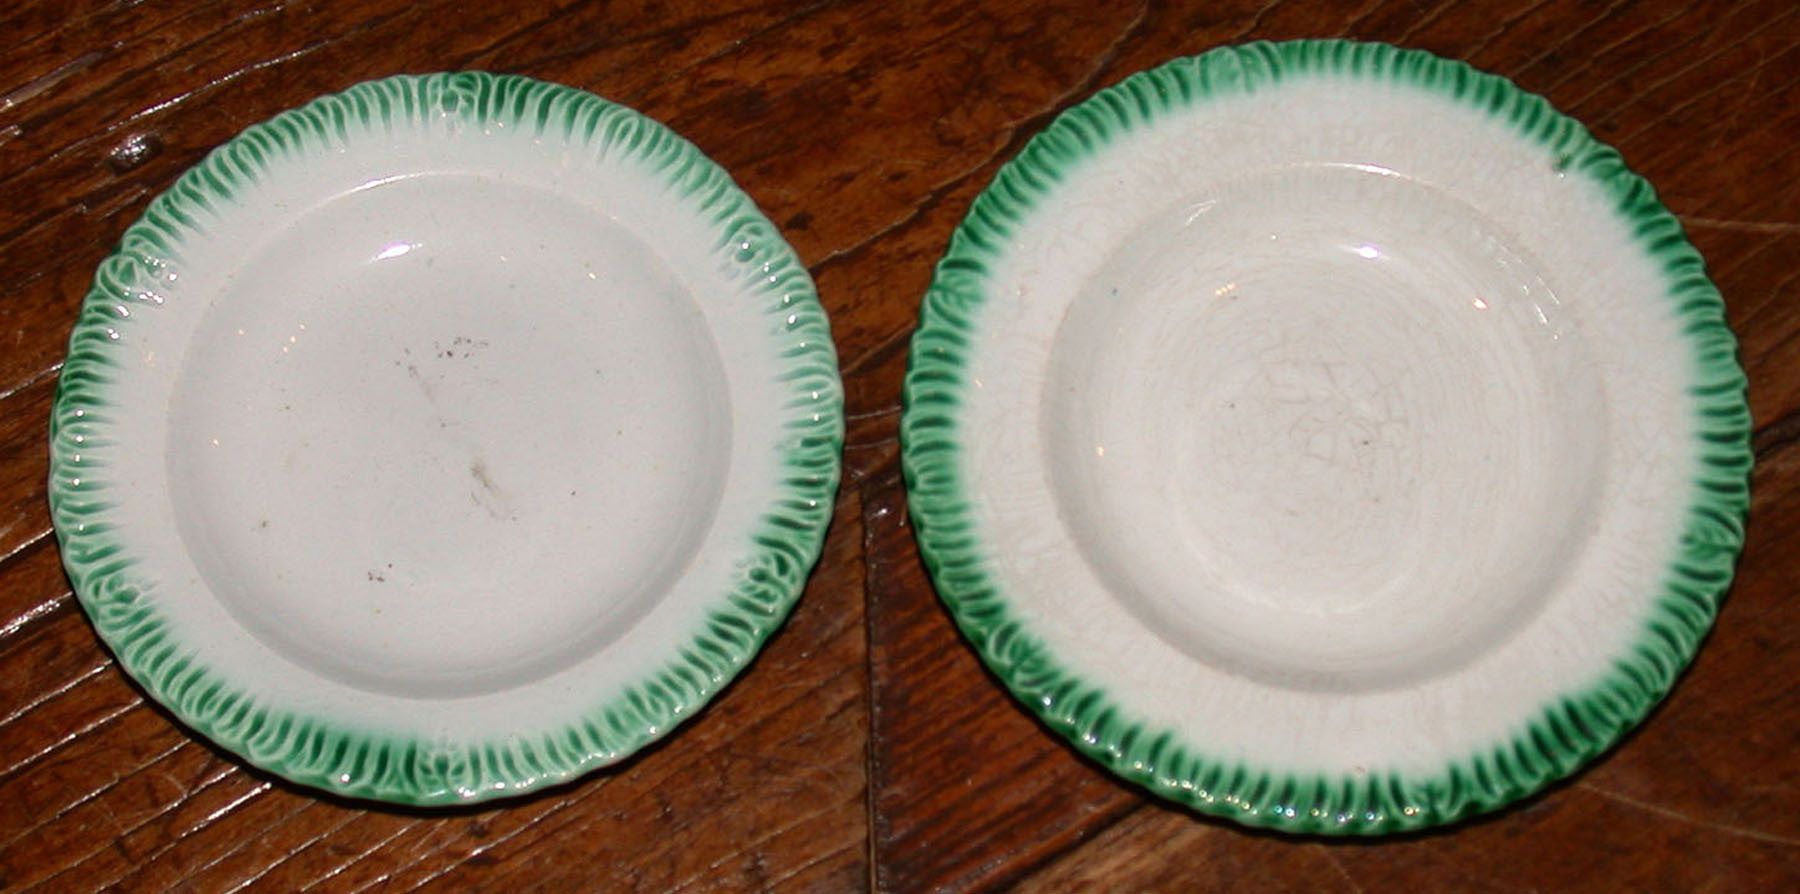 1969.0337.001, 1969.0337.002 Pearlware Davenport plates